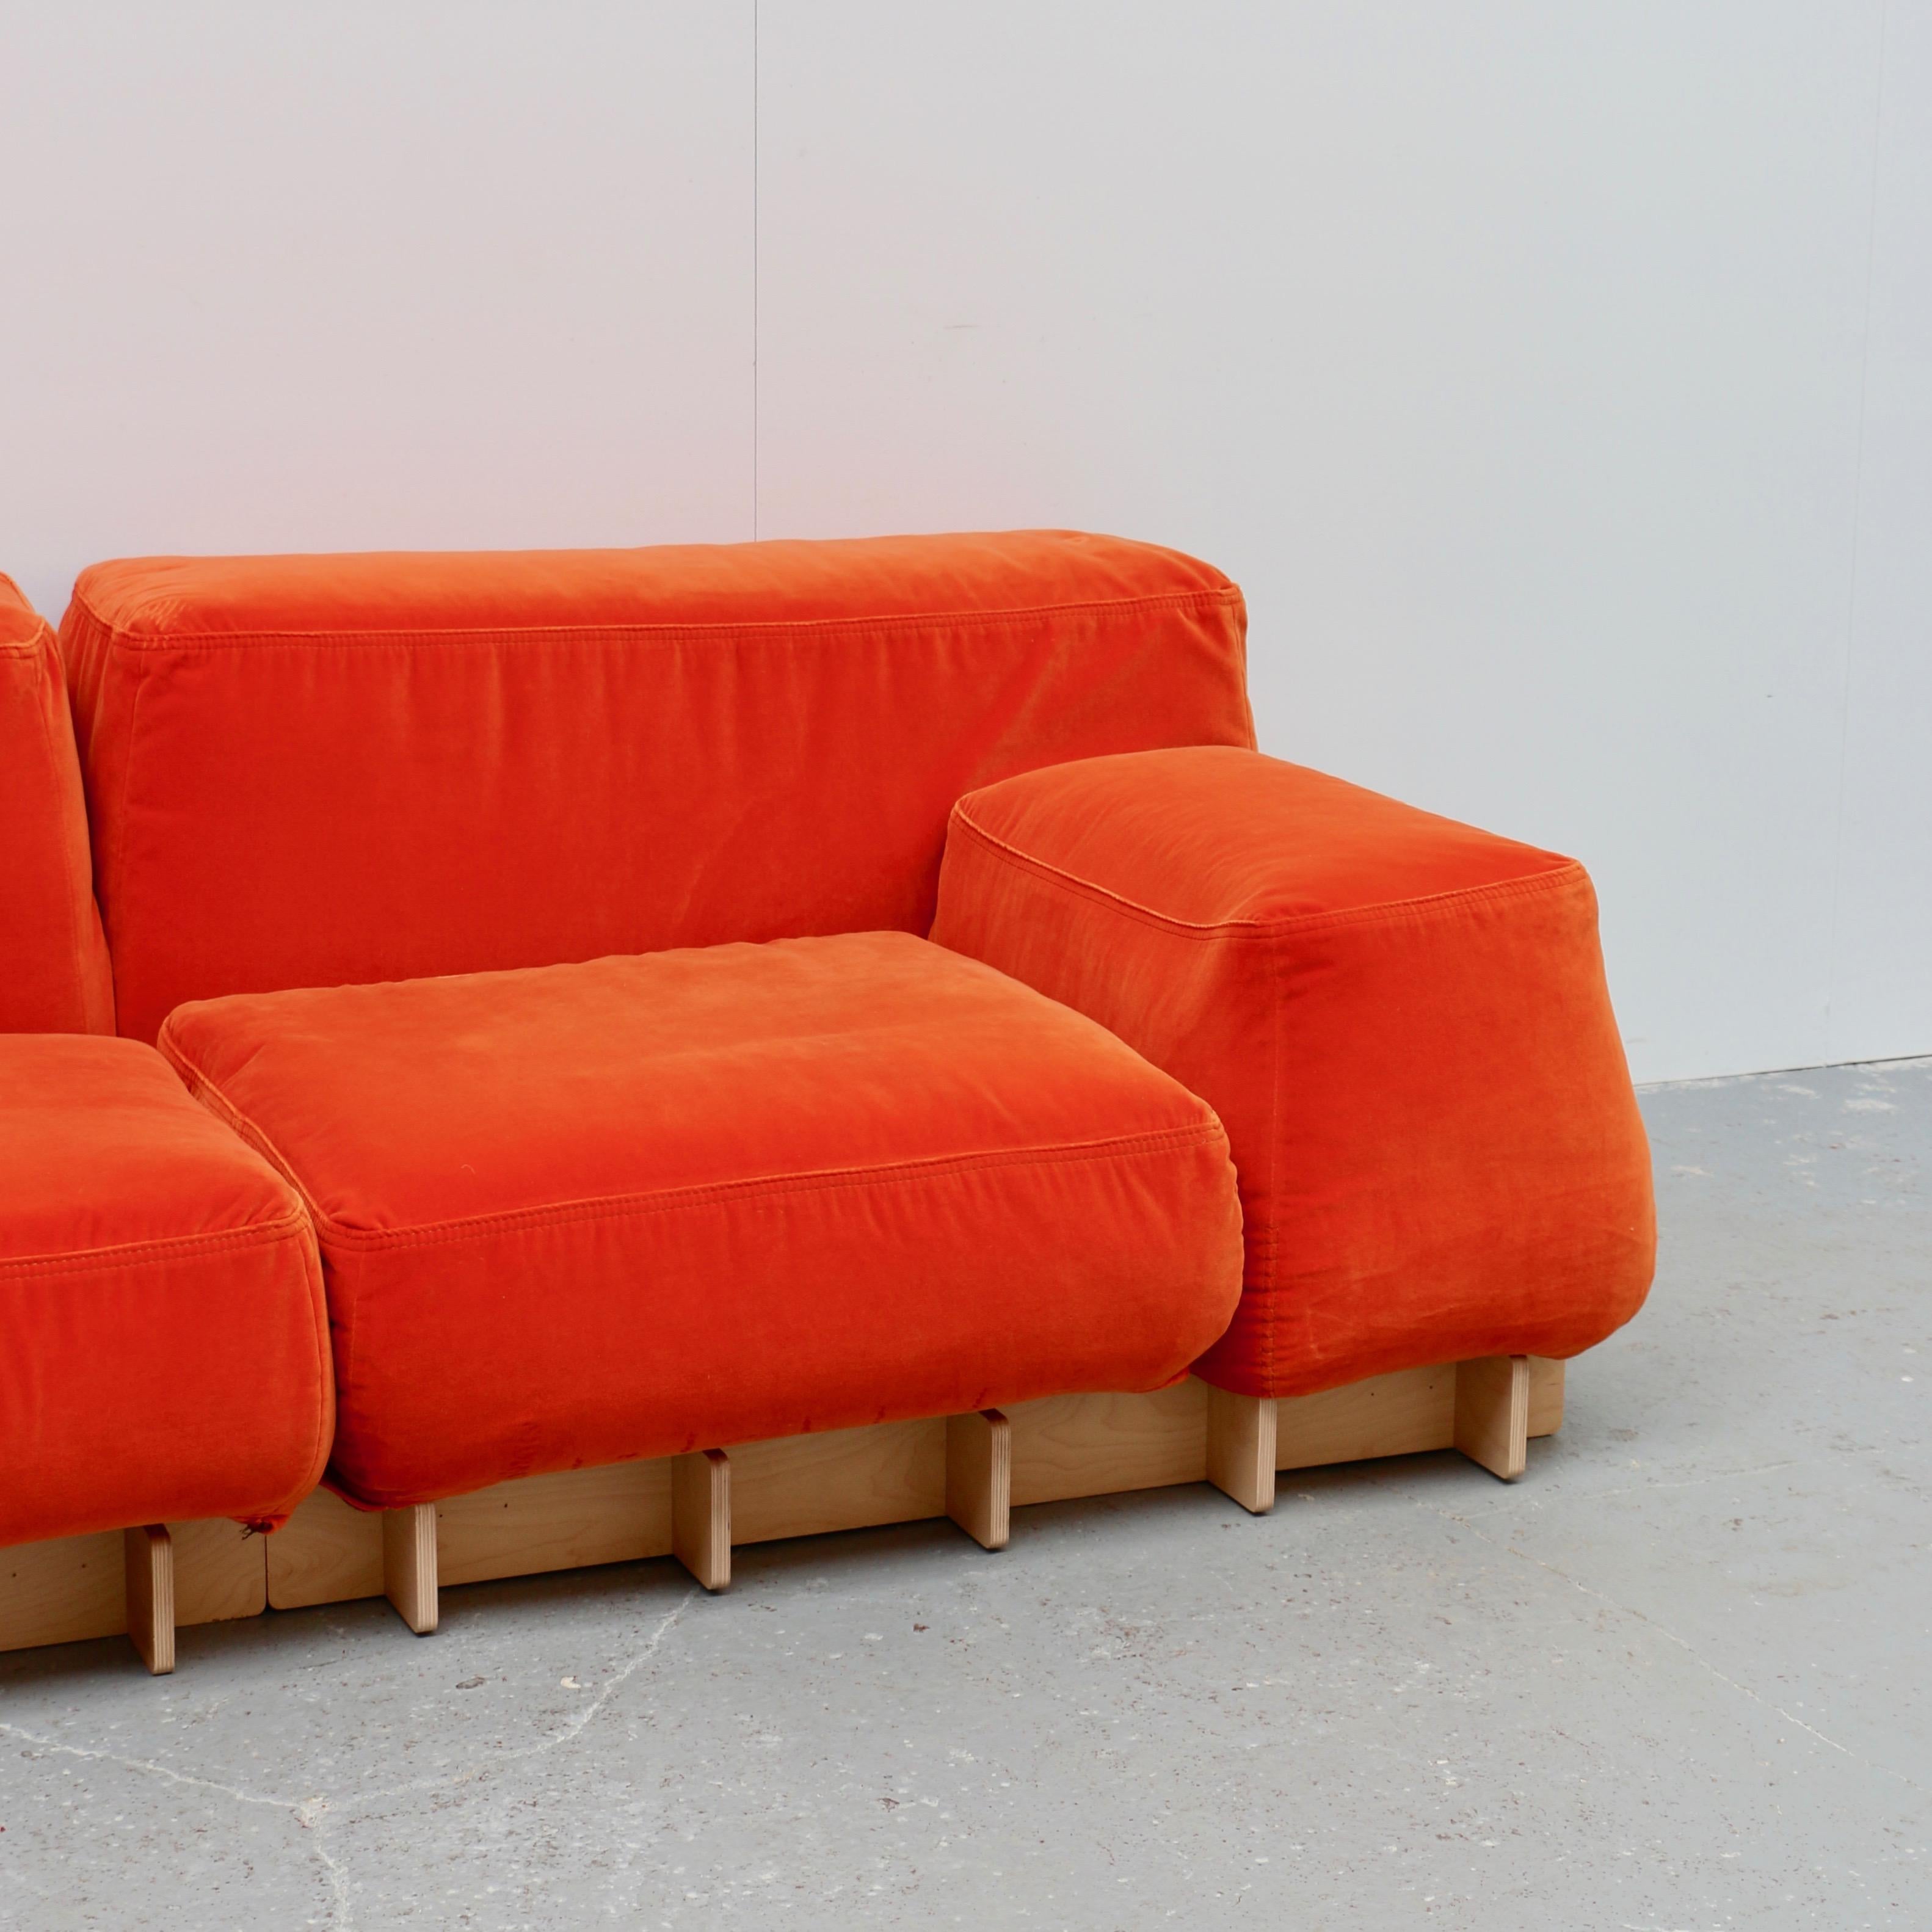 Large Modular Sofa in Orange Velvet, Italy, 2000s For Sale 2